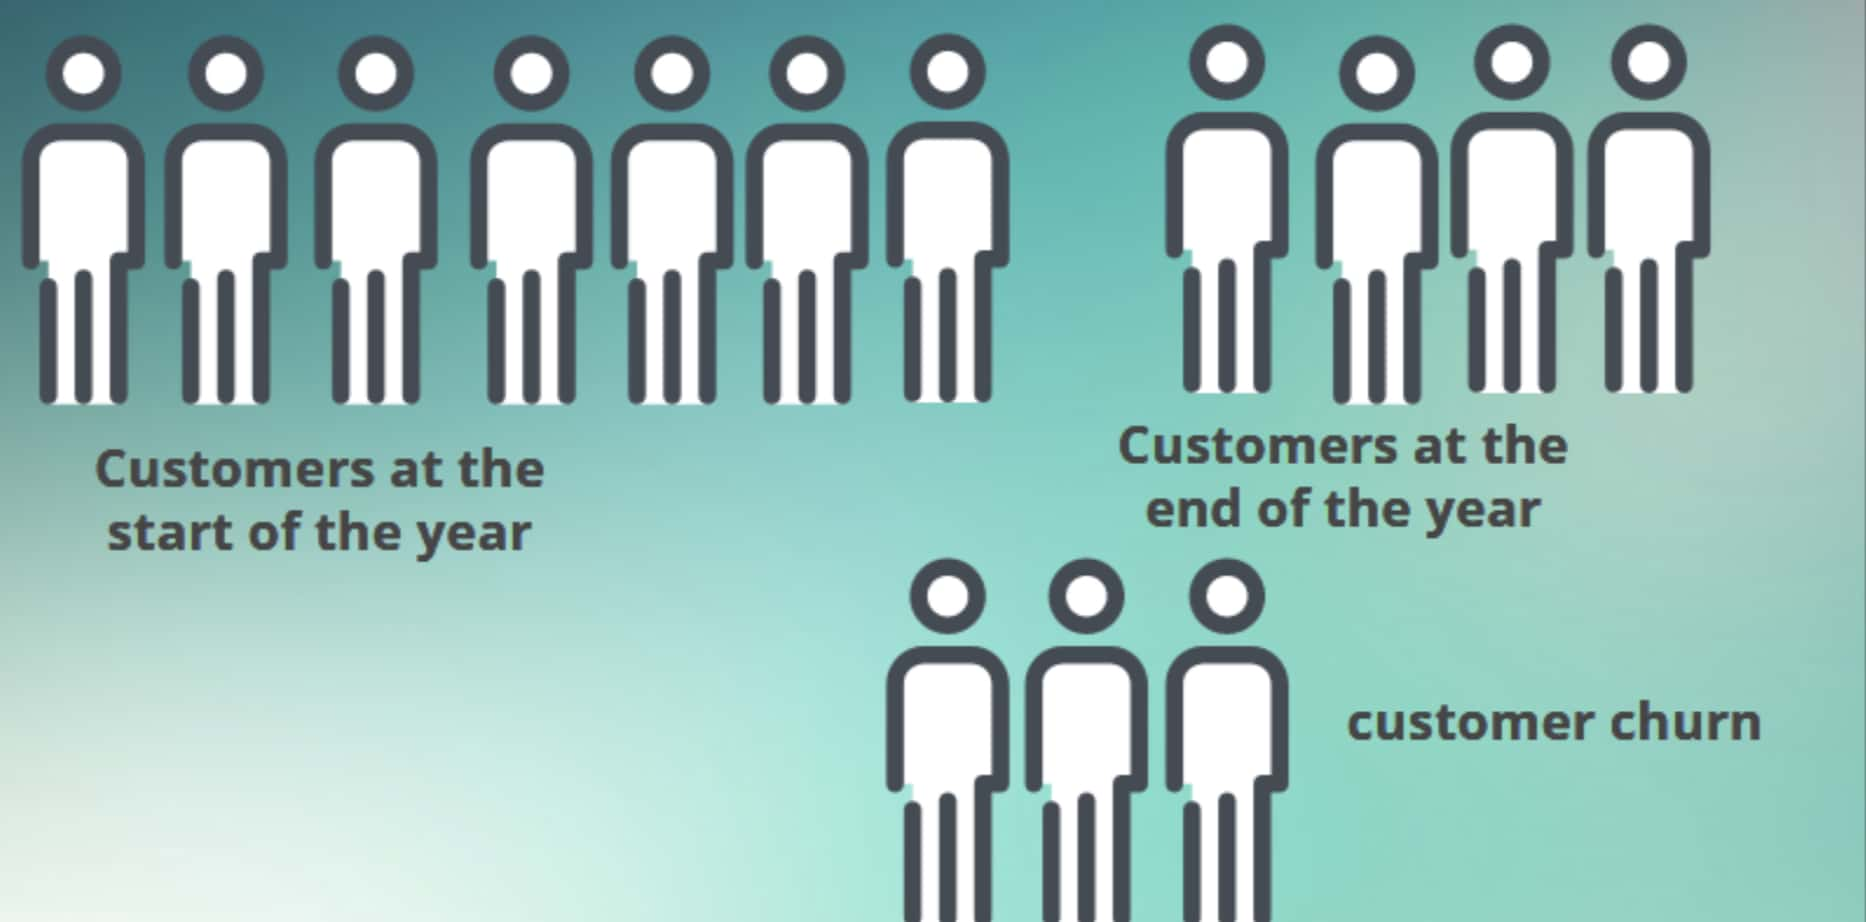 Customer churn diagram